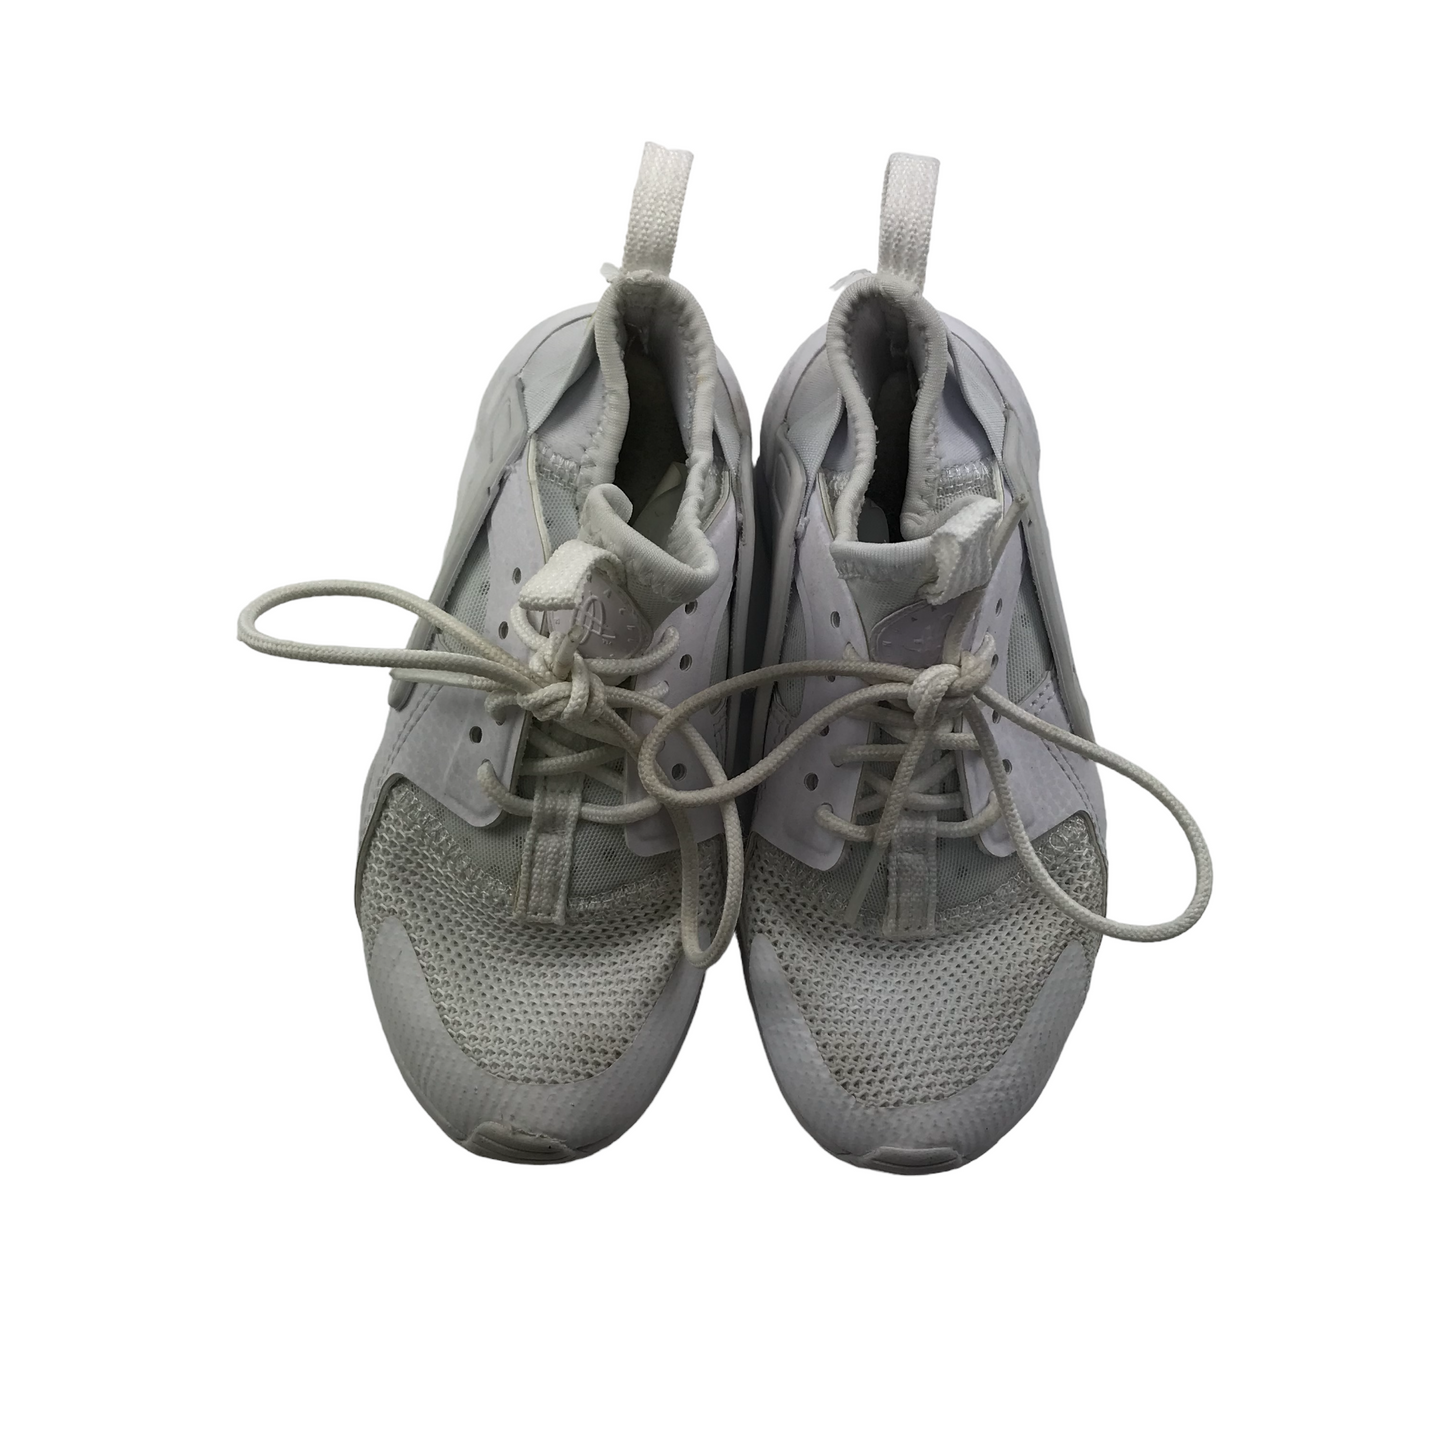 Nike Air Huaranche White Trainers Shoe Size 10.5 junior